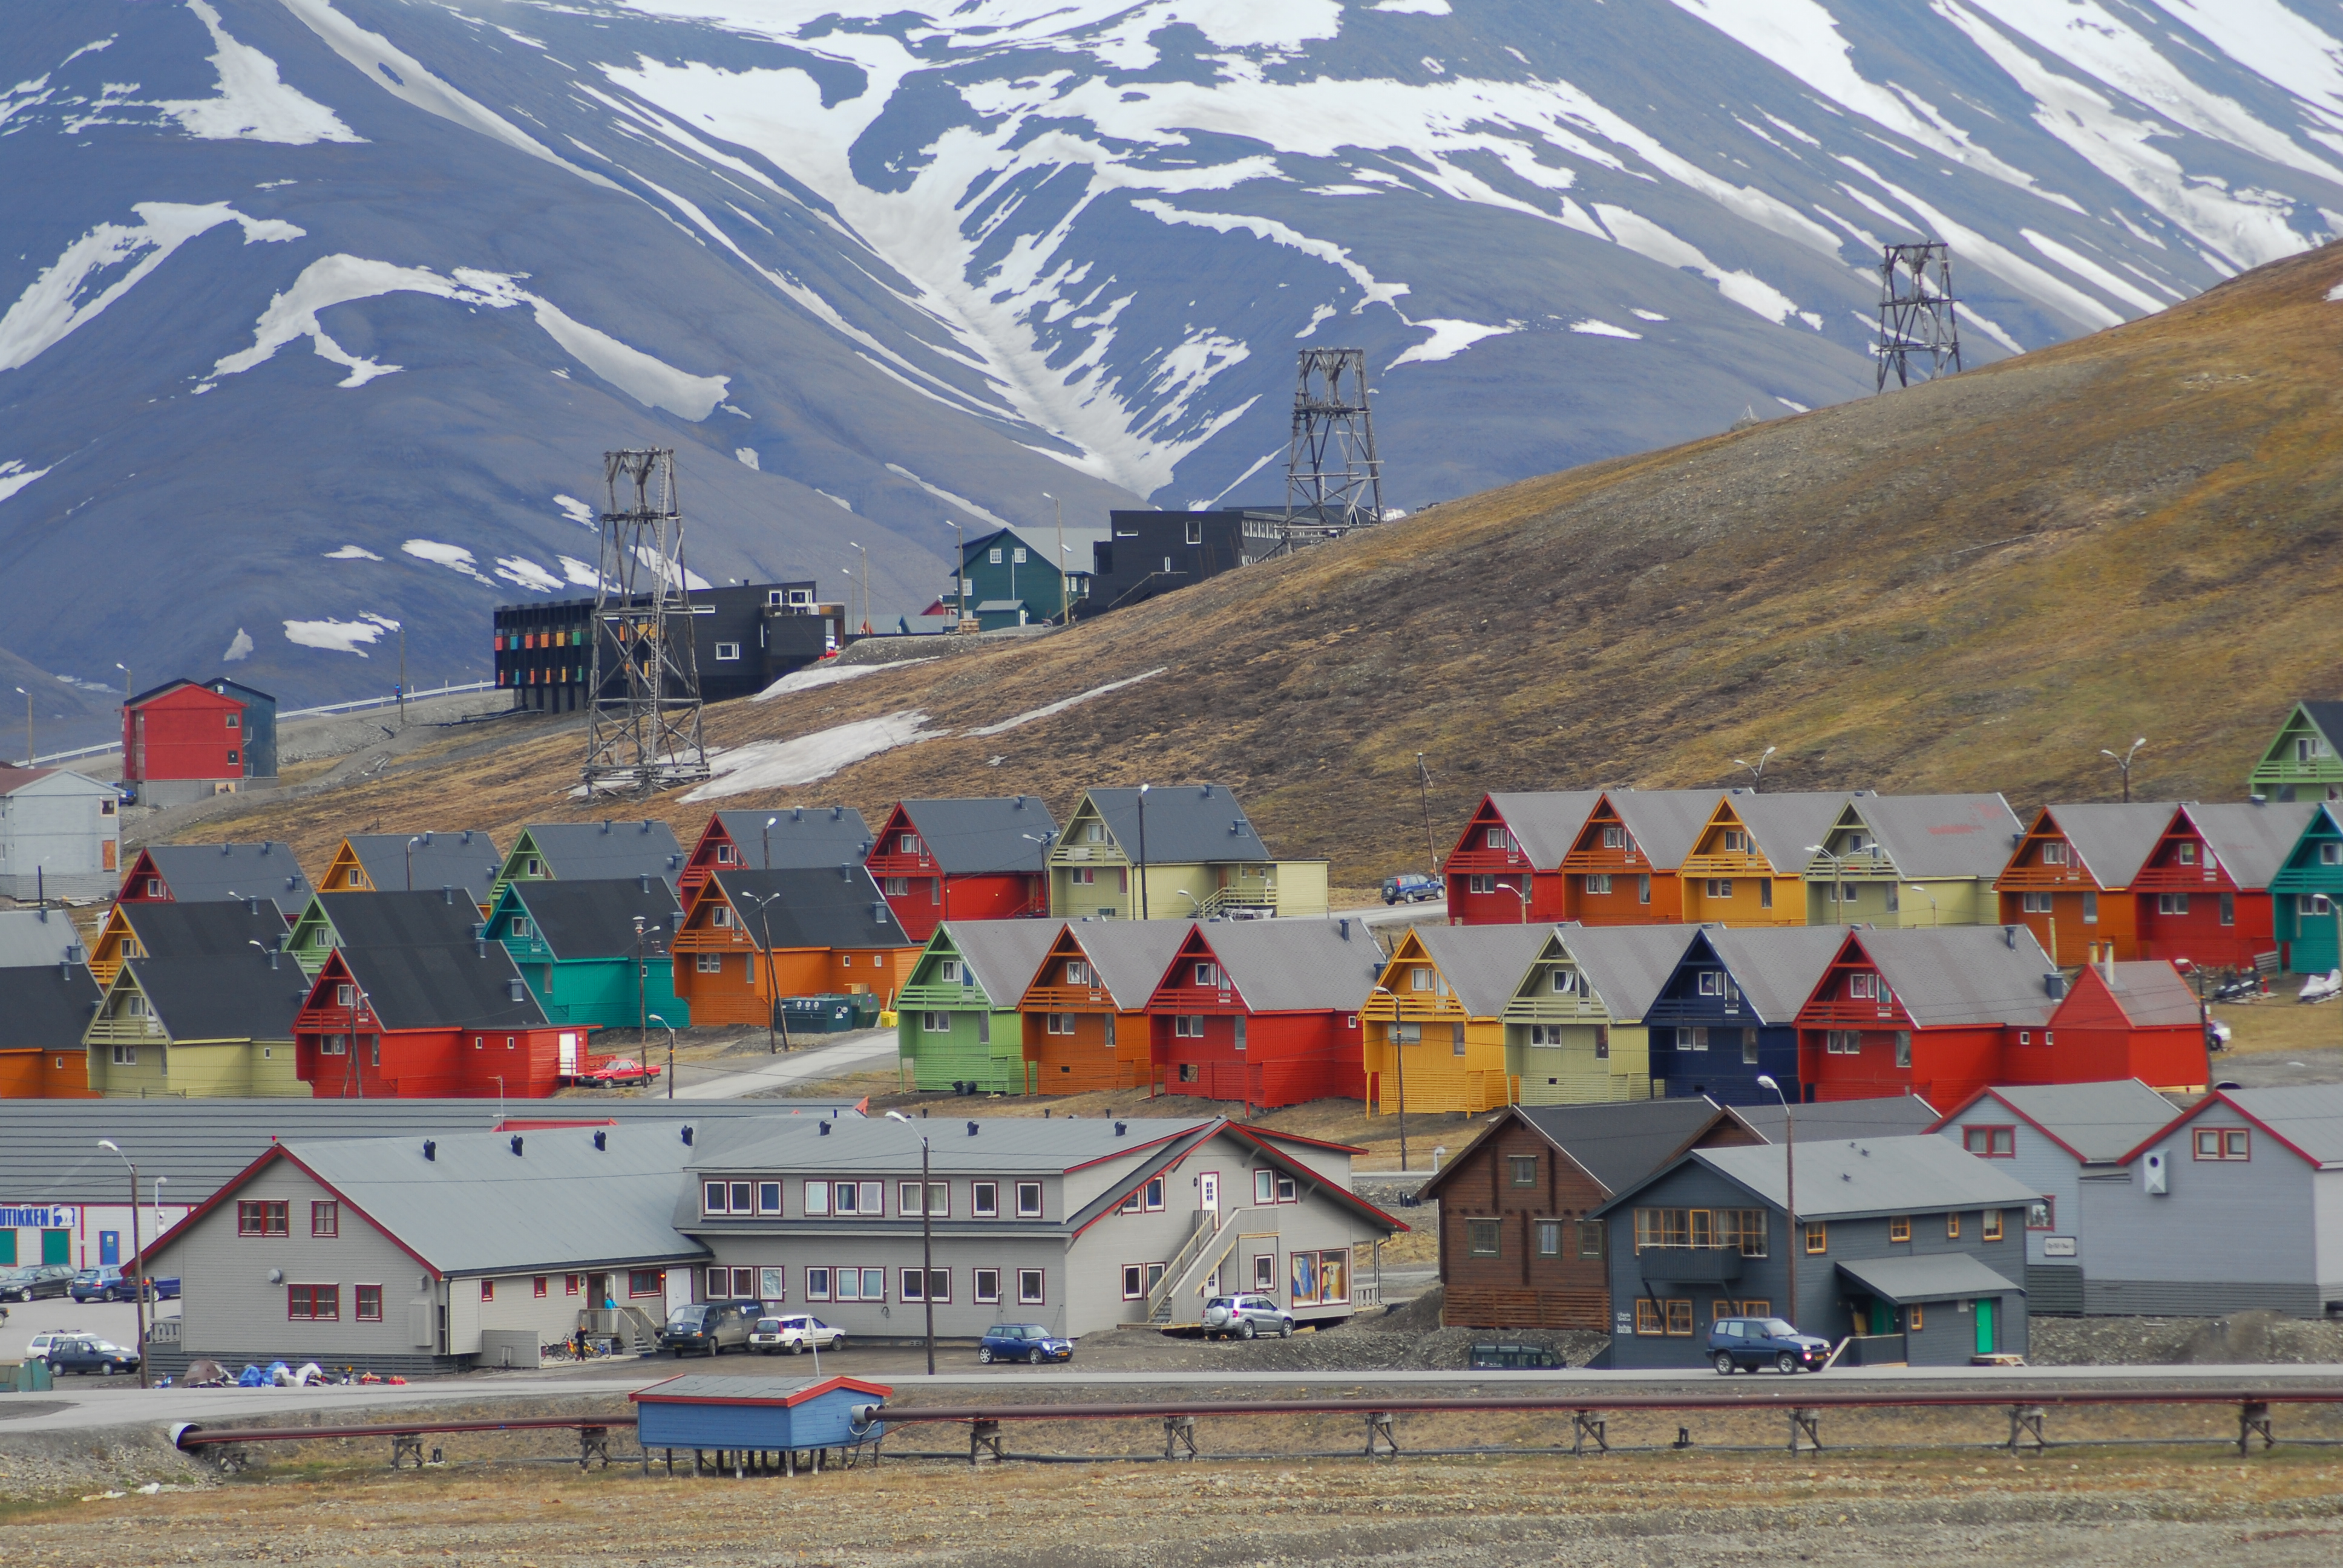 http://upload.wikimedia.org/wikipedia/commons/7/7b/Longyearbyen_colourful_homes.jpg